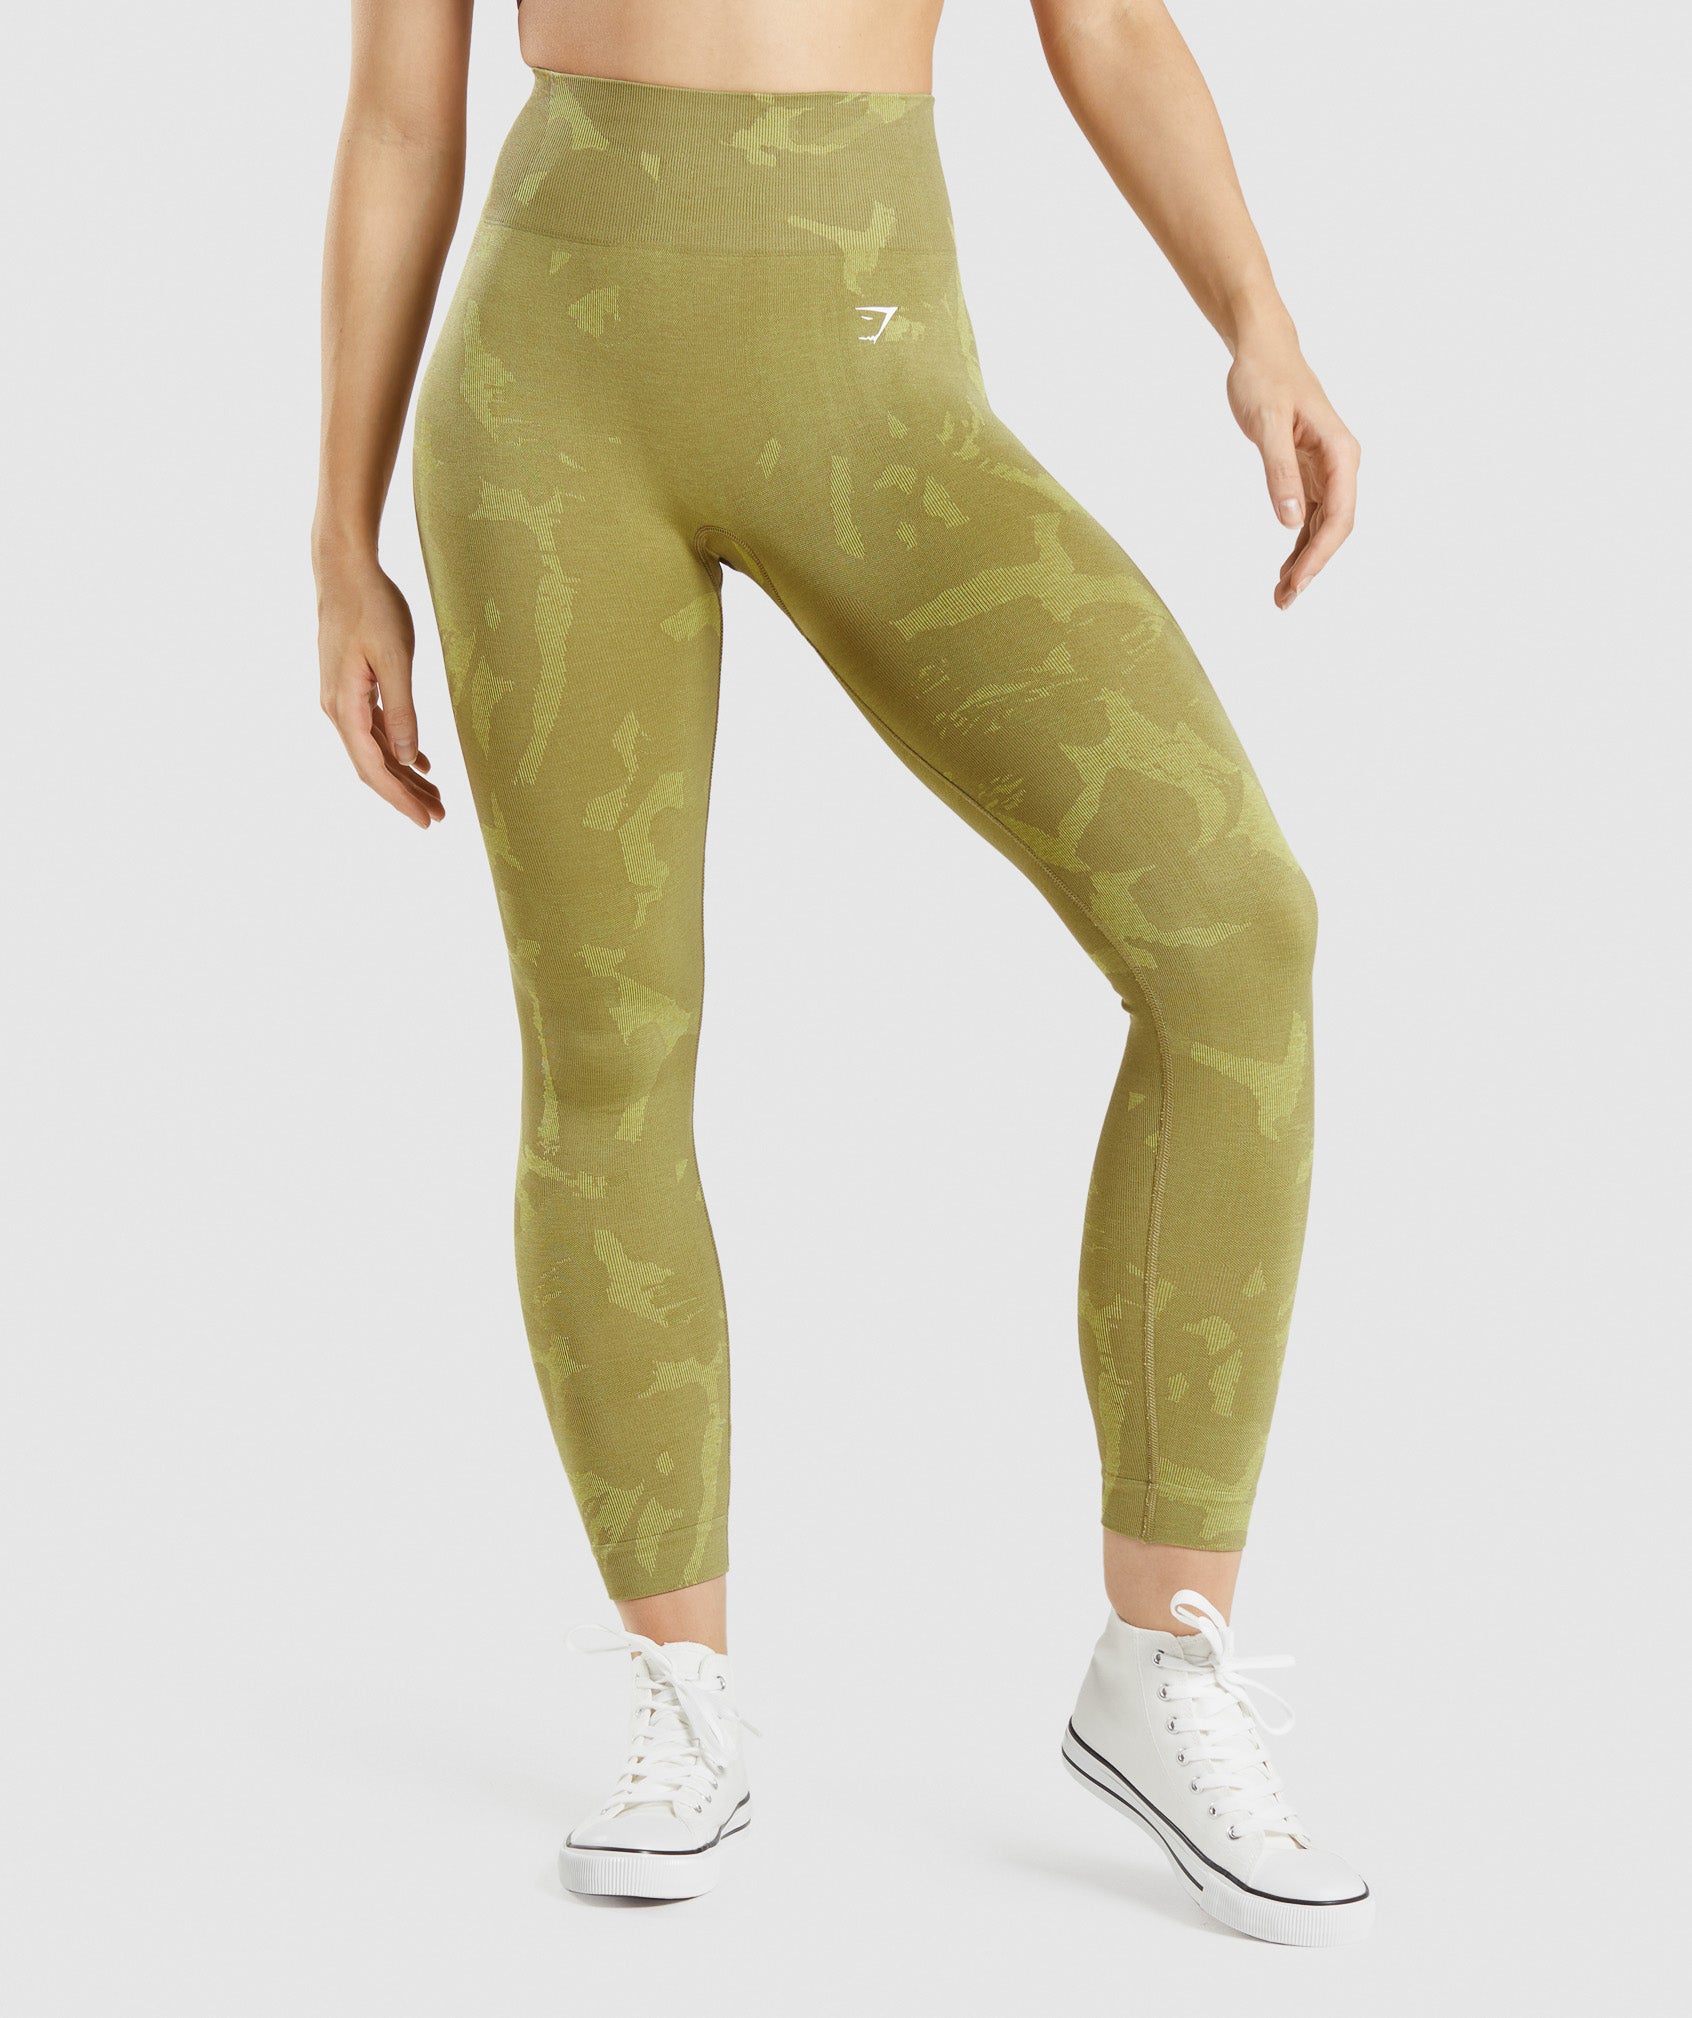 Squat Proof Leggings for Women Scrunch Butt Leggings for Women Seamless  High Waisted Slimming Workout Gym Yoga Pants HG4 at  Women's Clothing  store